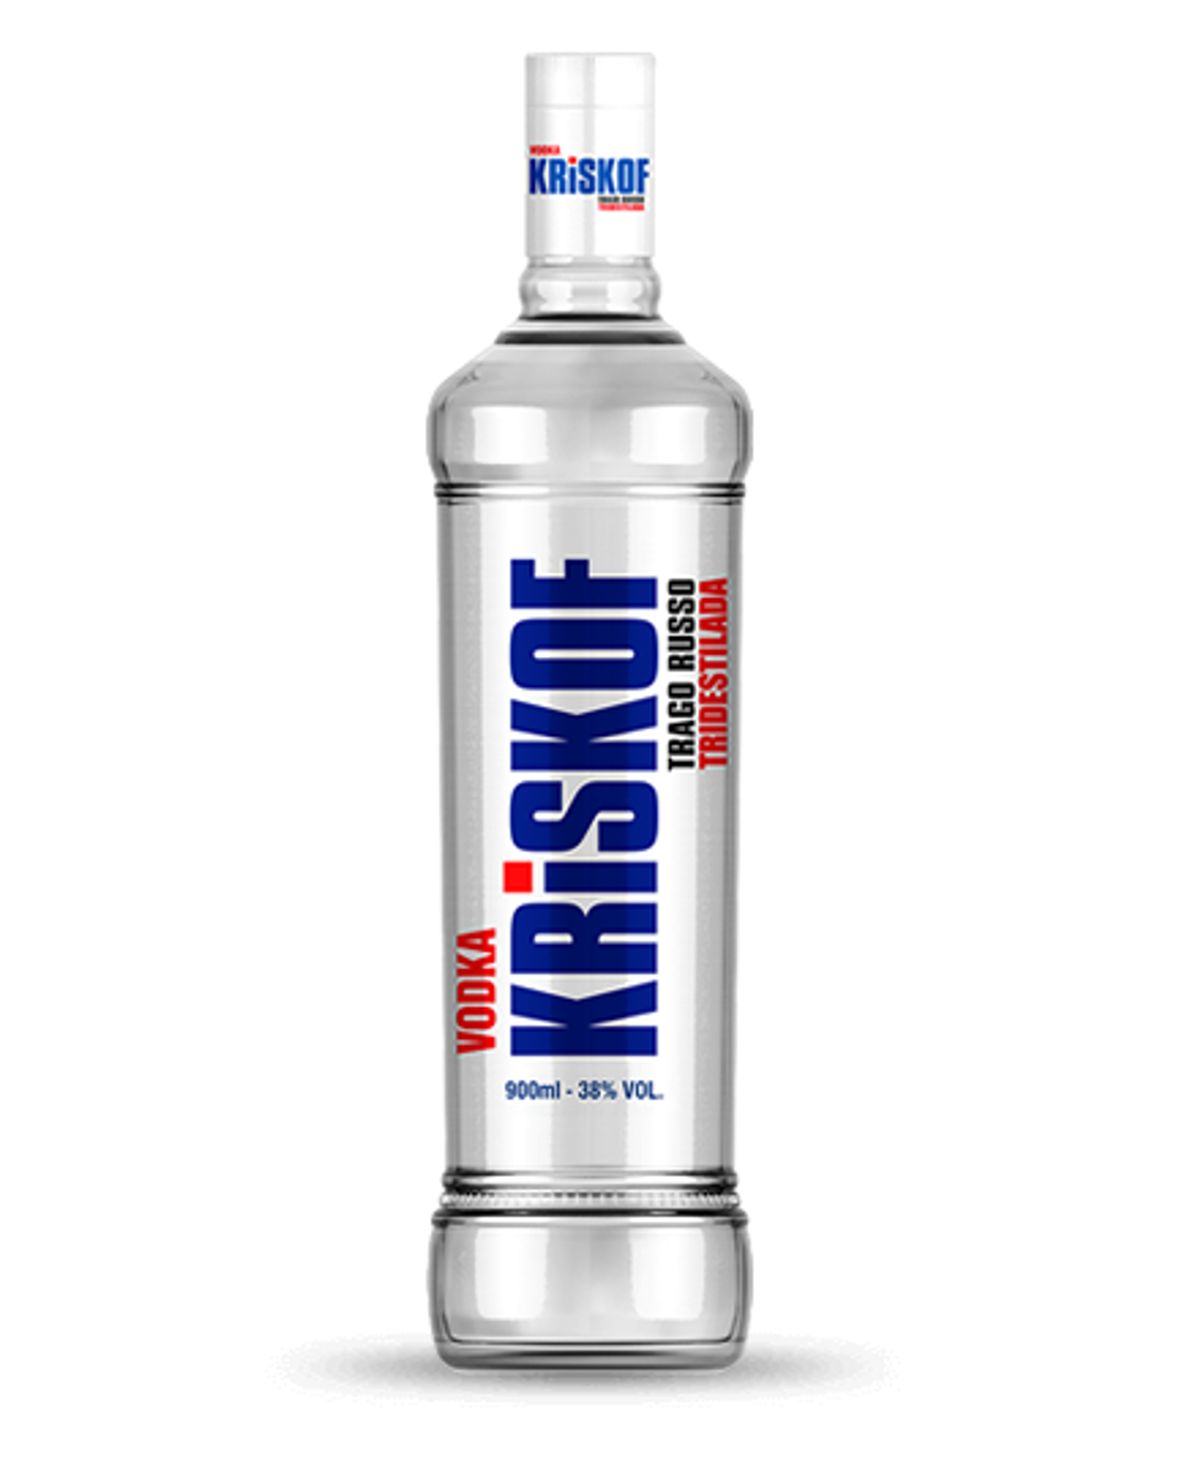 Vodka Kriskof Trago Russo 900ml image number 0